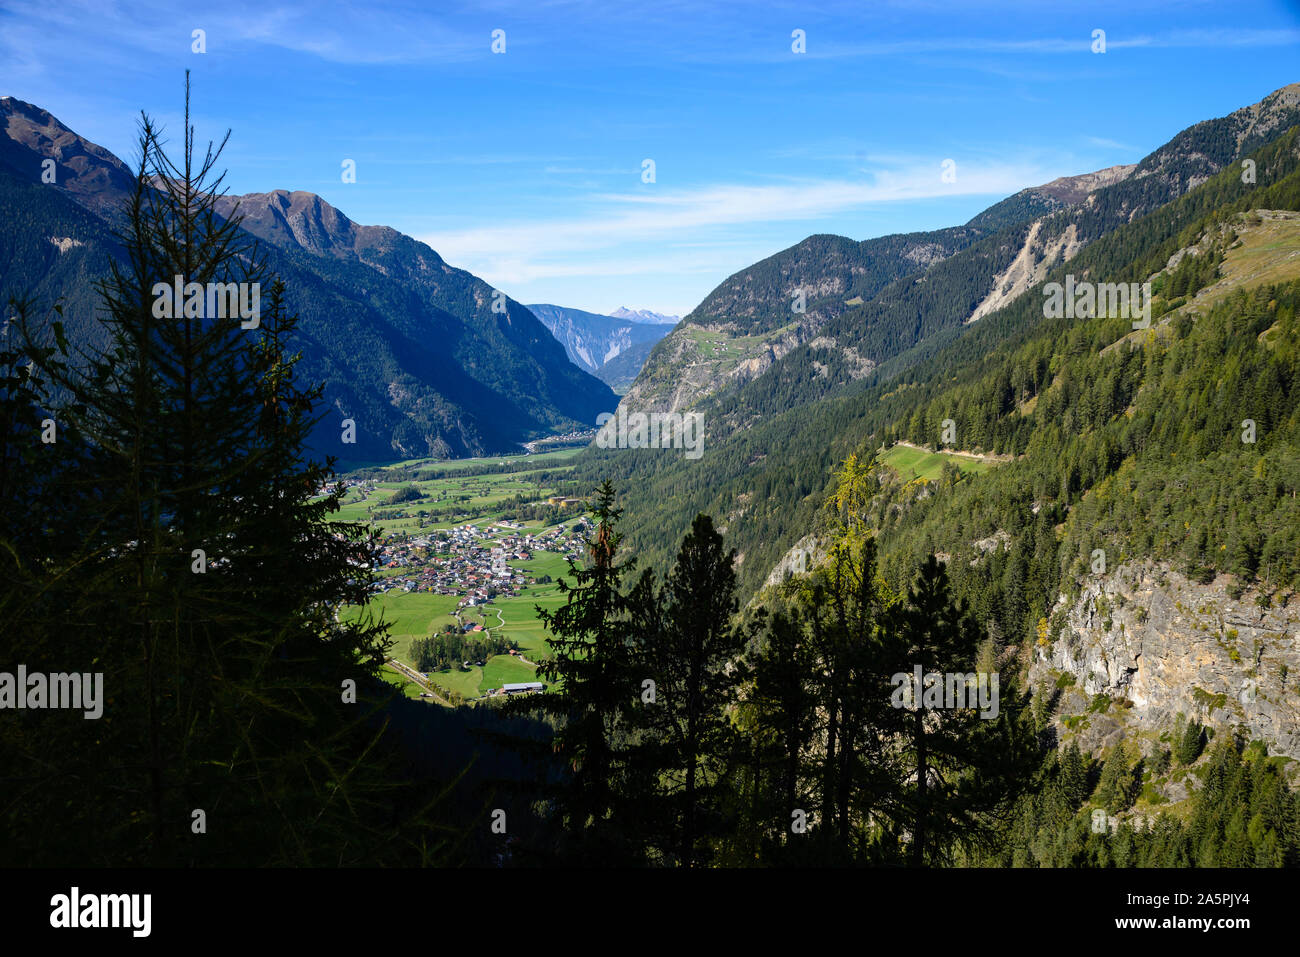 Grösste Der Wasserfall Tirols, Stuibenwasserfall im Ötztal, Tirol, Östereich Foto Stock